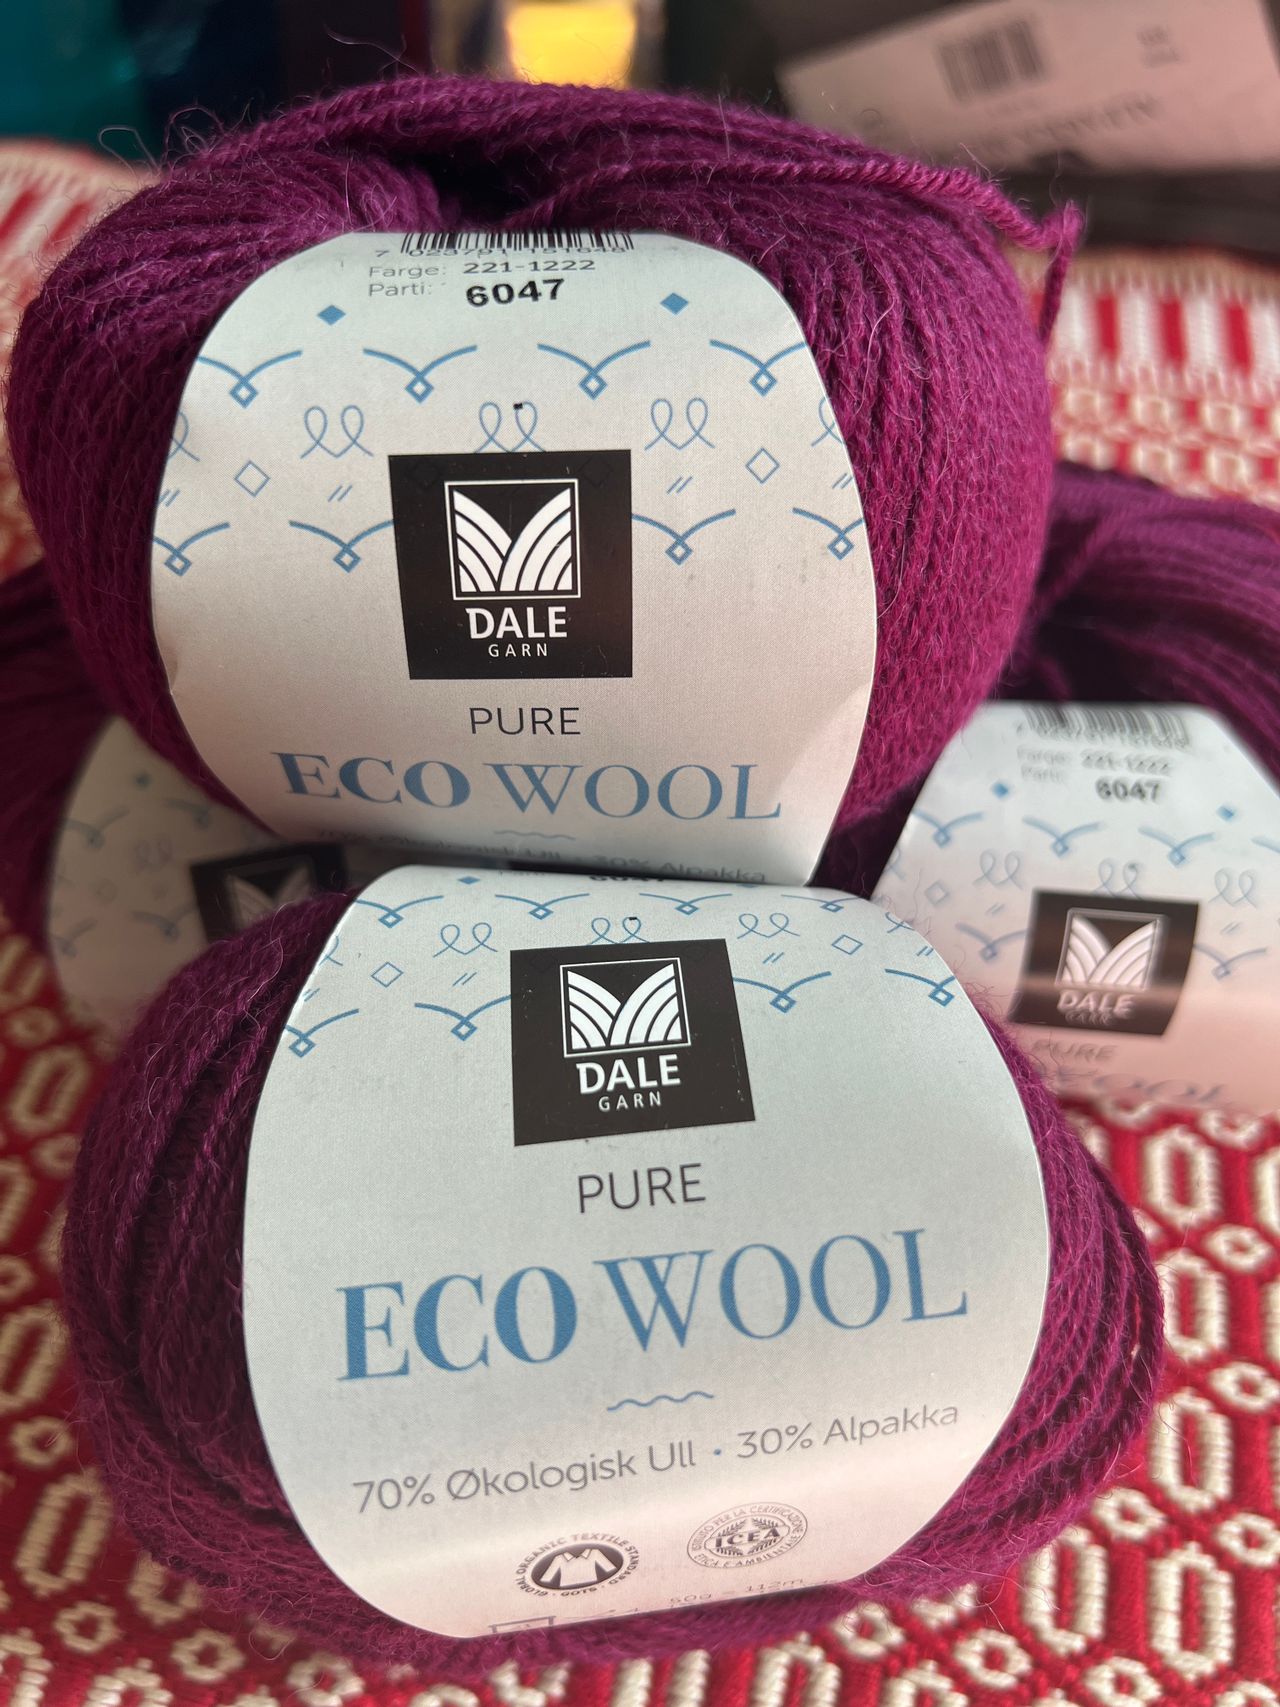 Wreck Elastisk lille Dale garn Pure Eco wool | FINN torget